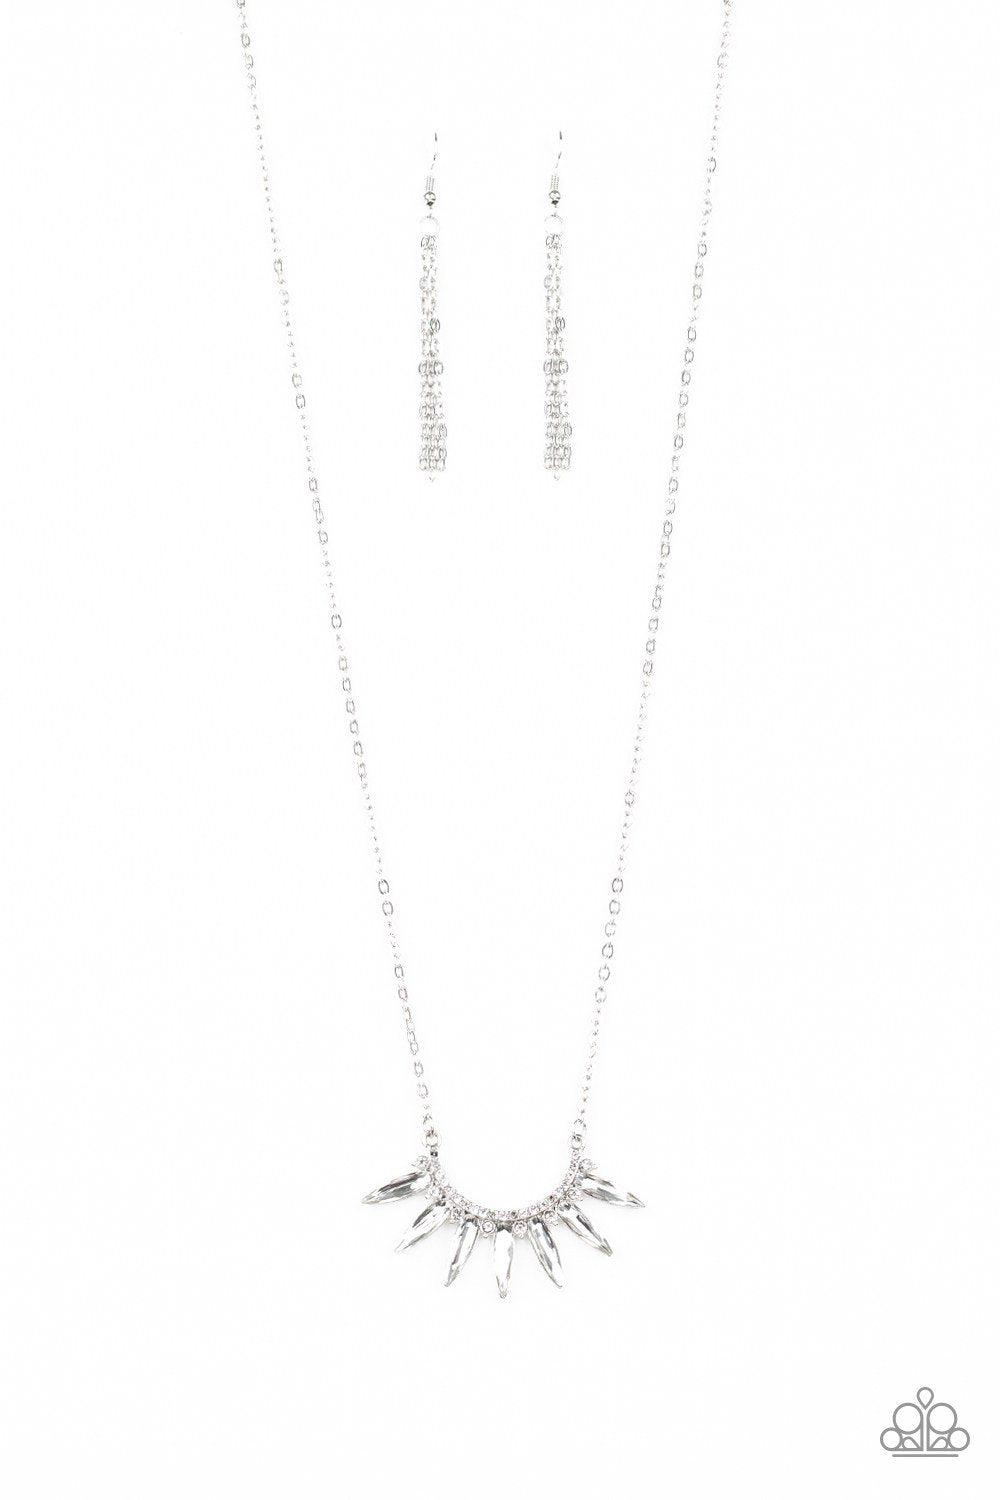 Empirical Elegance White Rhinestone Necklace - Paparazzi Accessories-CarasShop.com - $5 Jewelry by Cara Jewels